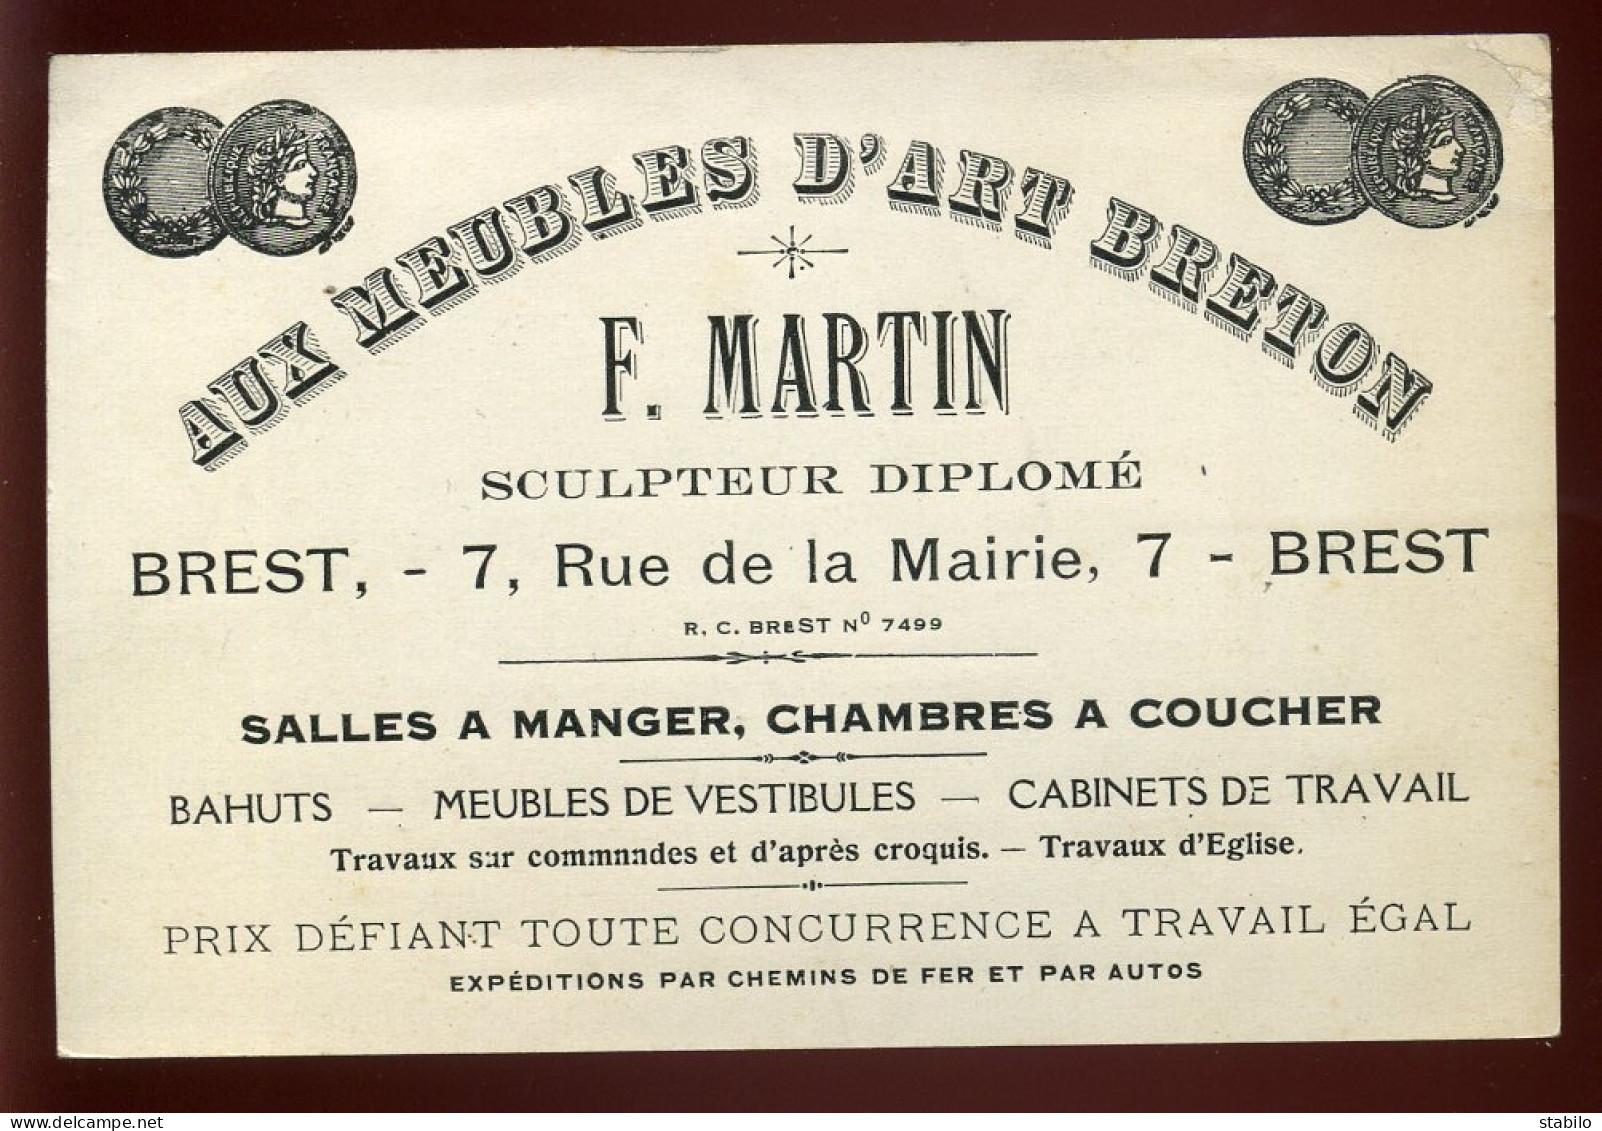 CARTE DE VISITE - BREST - MEUBLES D'ART BRETON F. MARTIN SCULPTEUR - 7 RUE DE LA MAIRIE - Visitenkarten